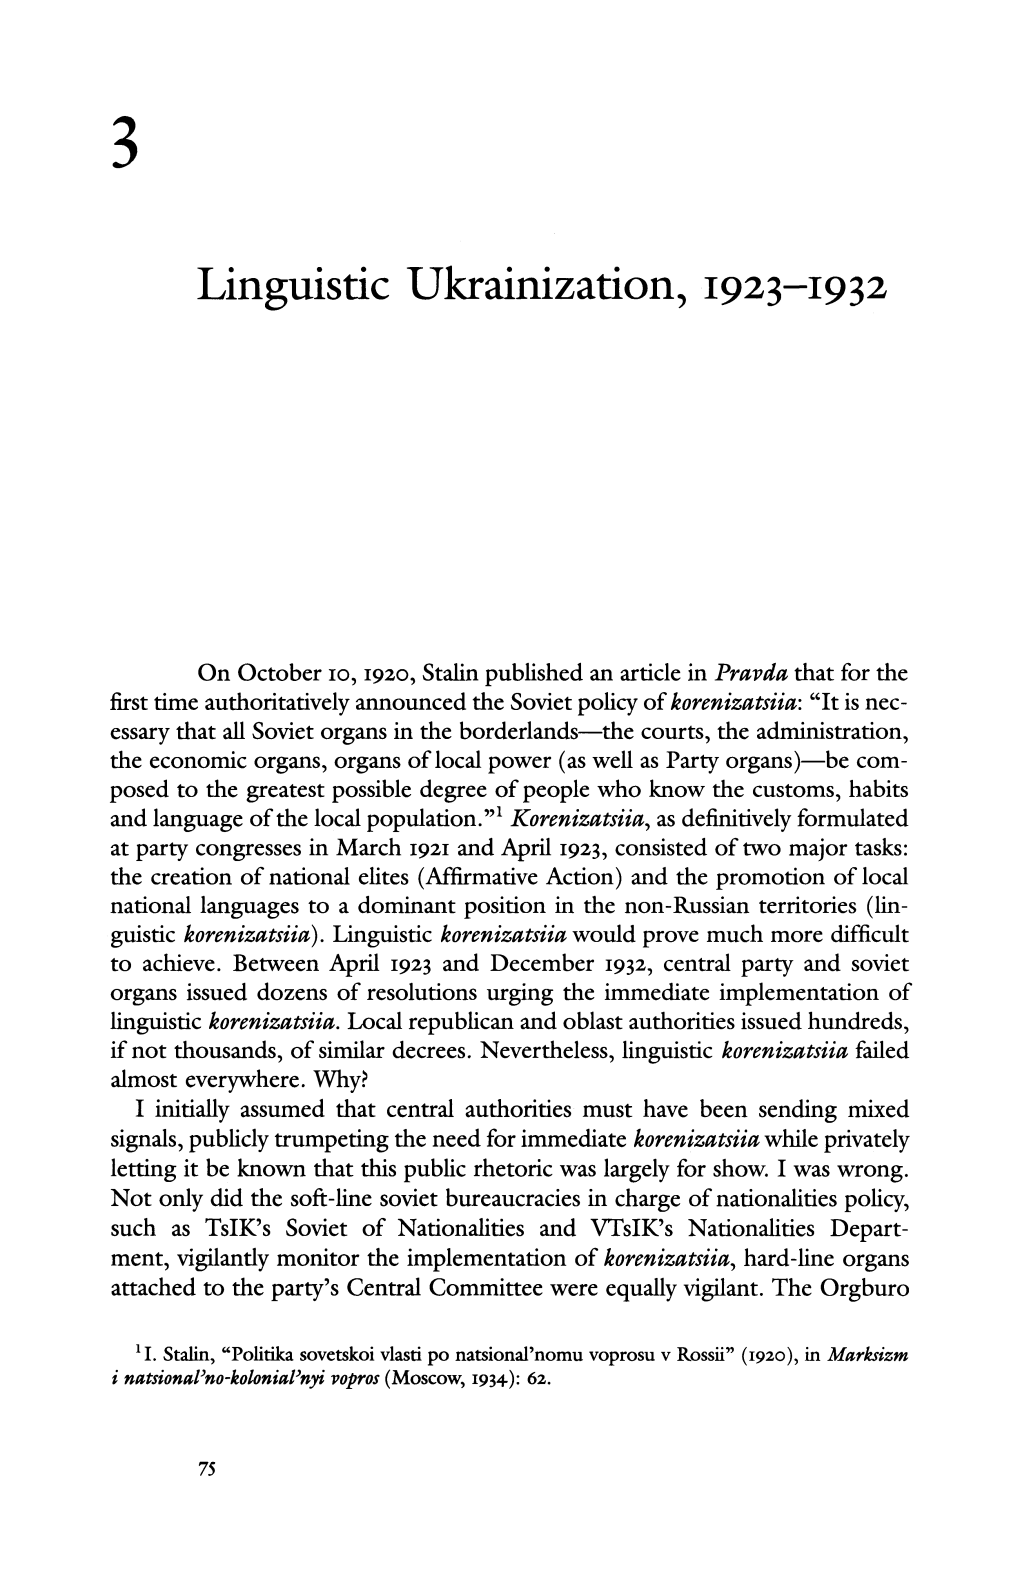 Linguistic Ukrainization, 1923-1932